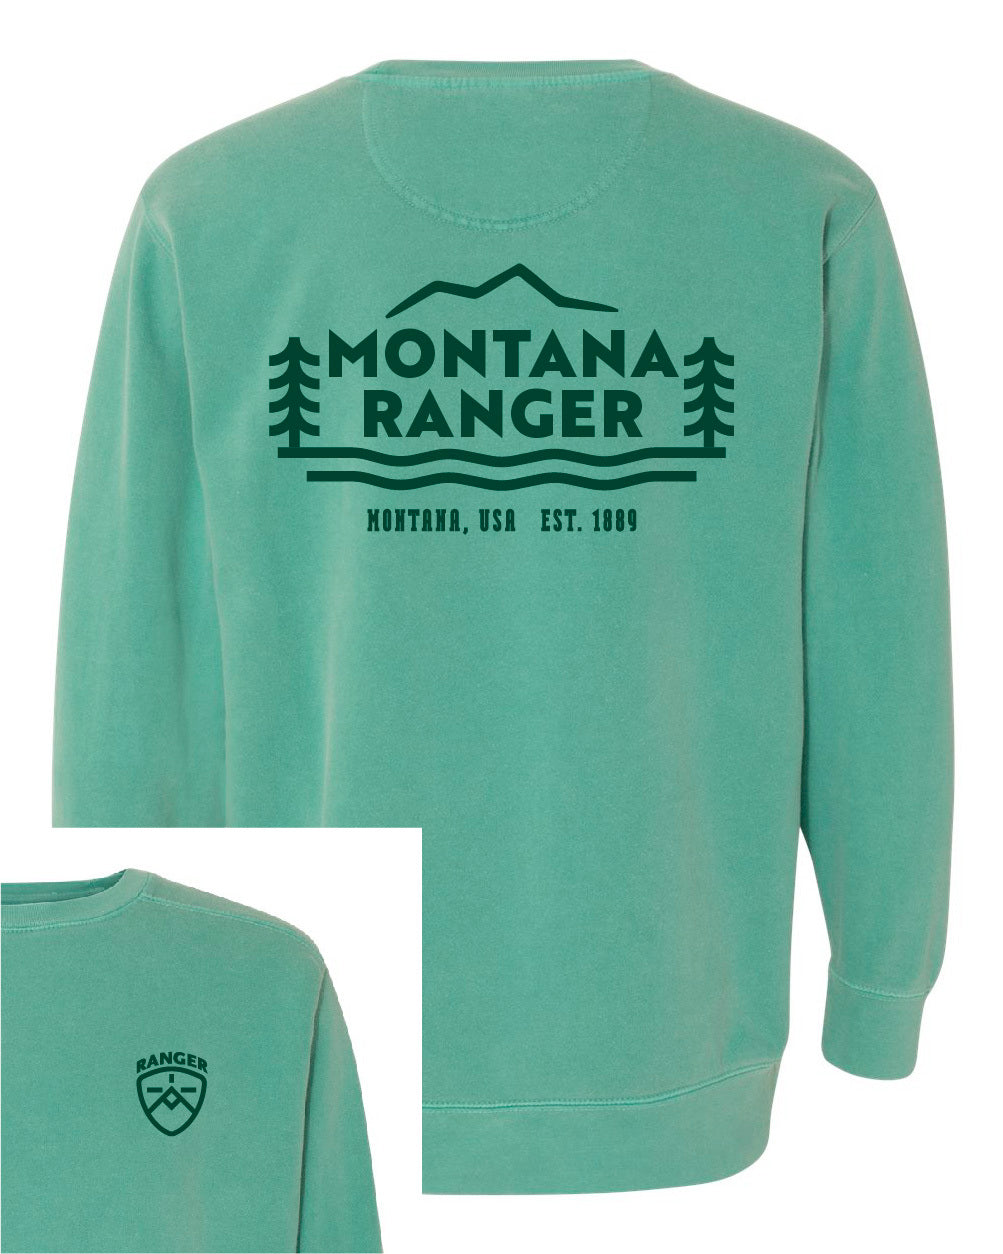 Montana Ranger Crewneck sweatshirt